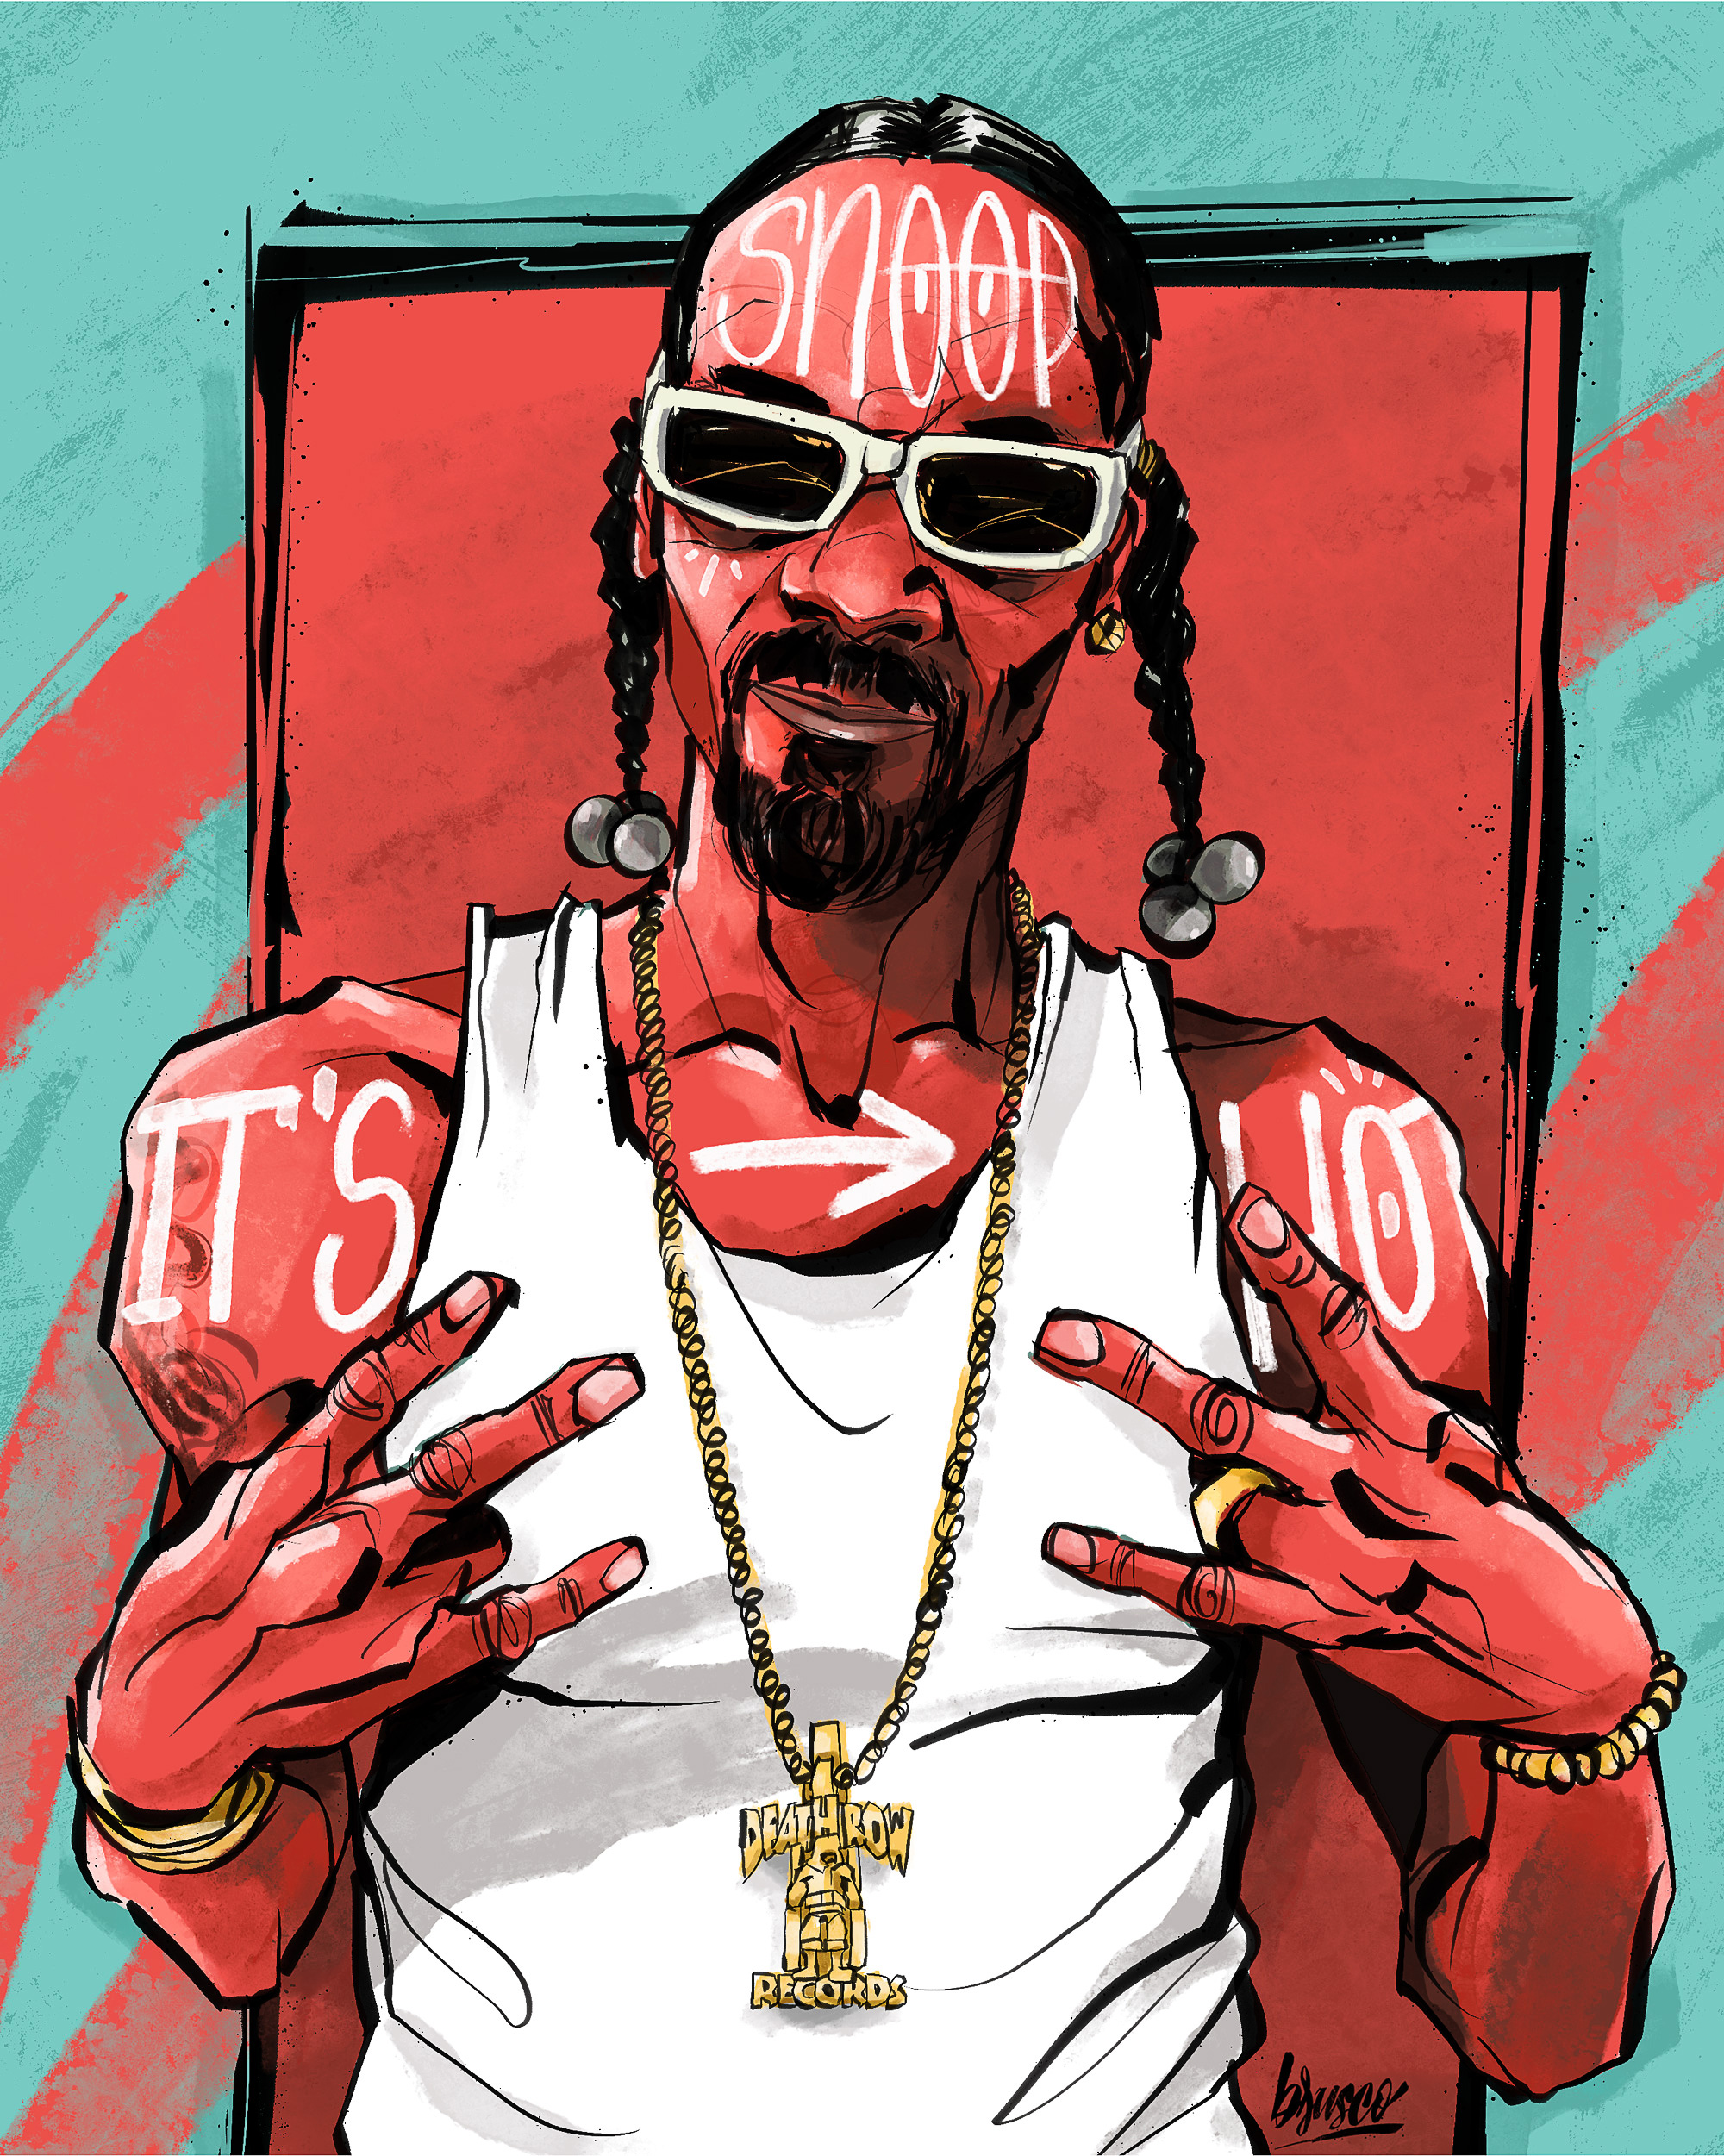 Snoop Dogg byBrusco